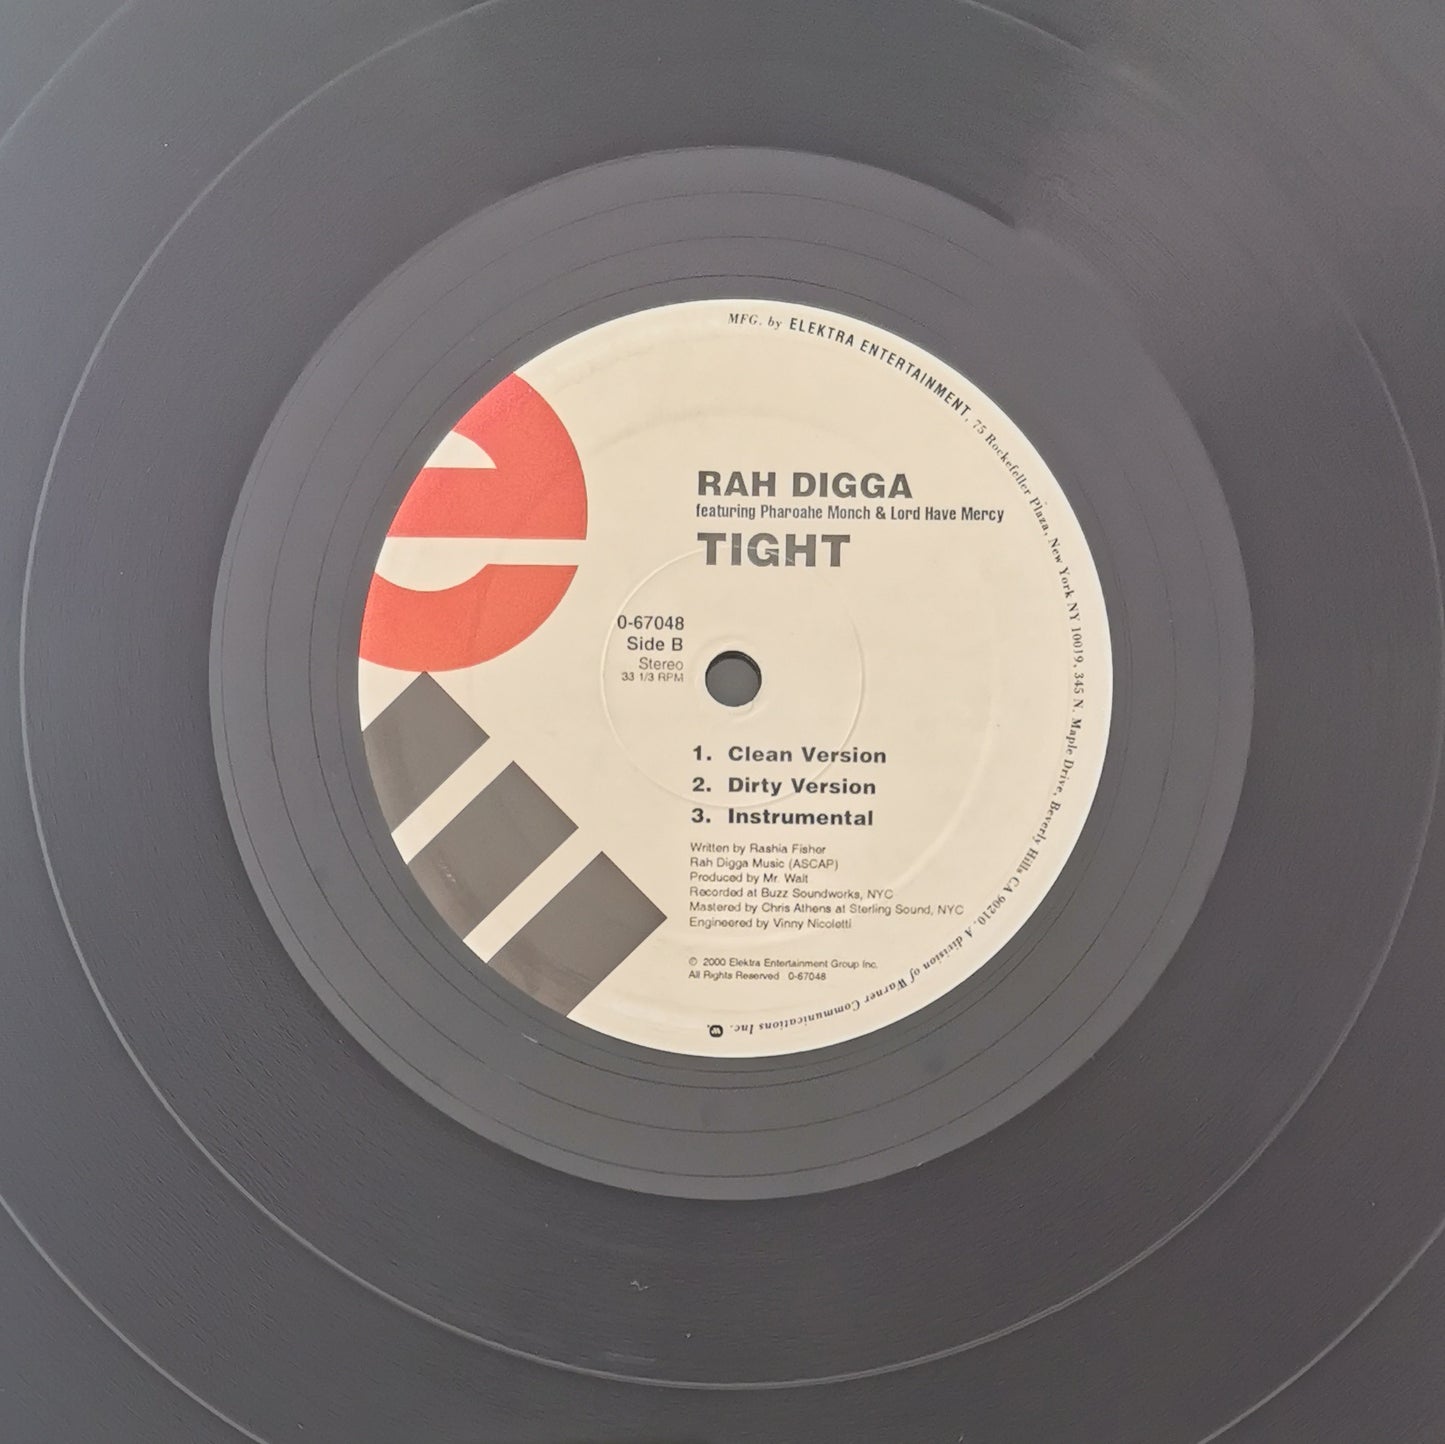 RAH DIGGA - Imperial / Tight (Remix) (feat. Busta Rhymes)